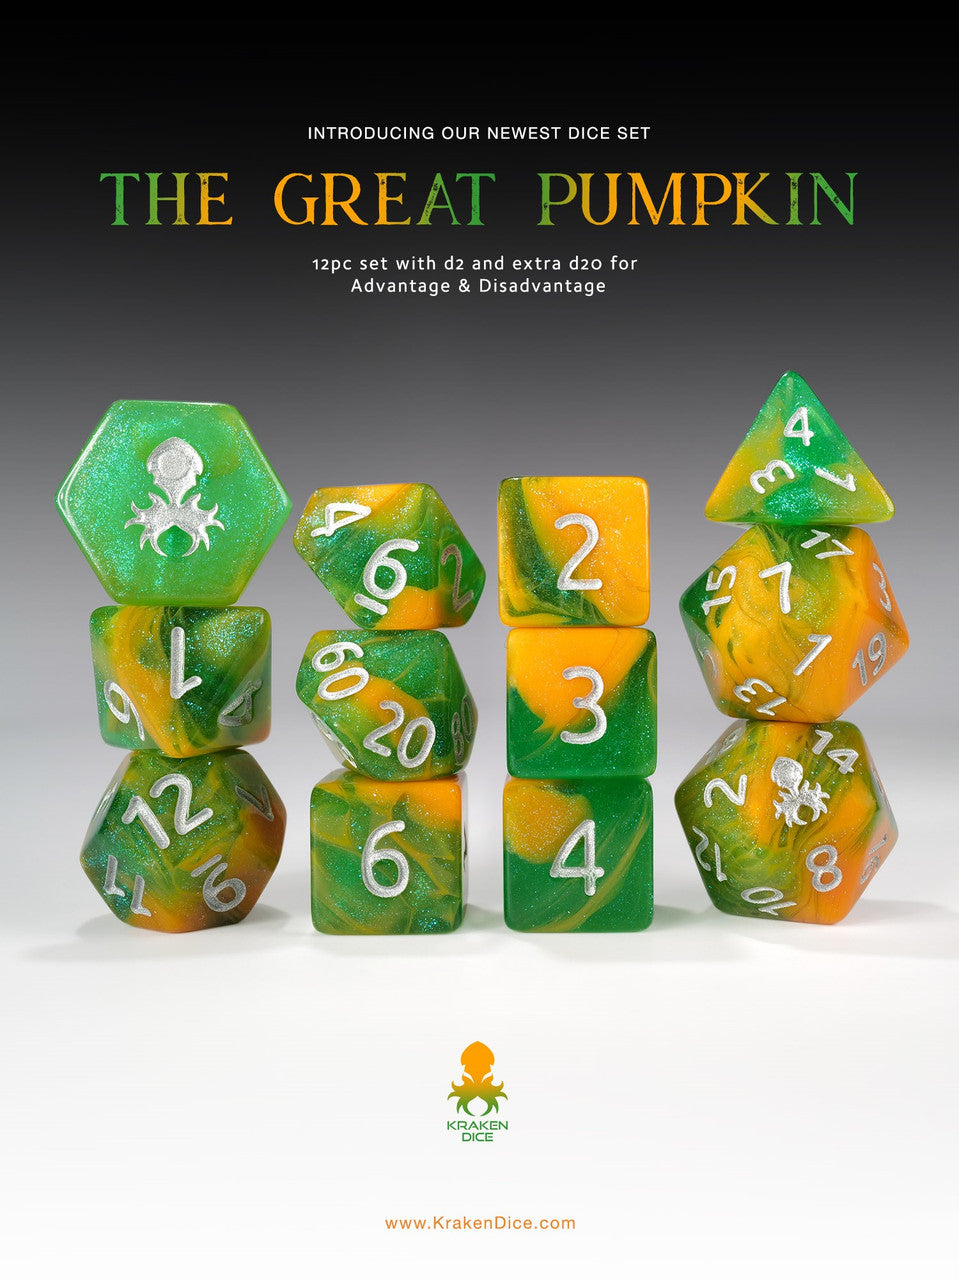 The Great Pumpkin 12pc RPG Dice Set